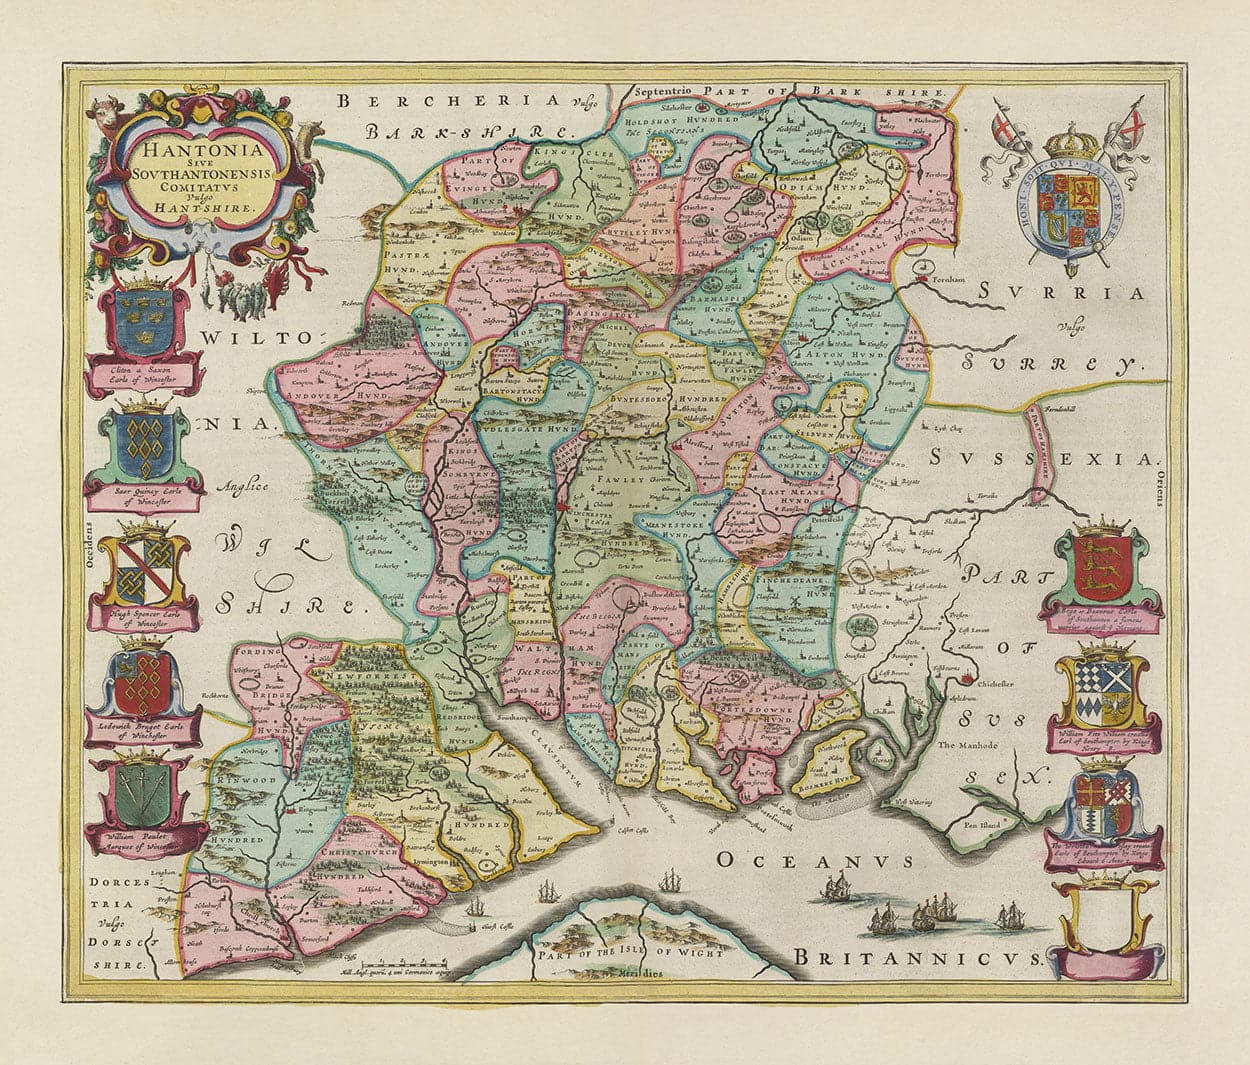 Mapa antiguo de Hampshire, 1665 por Joan Blaeu - Winchester, Portsmouth, Southampton, Basingstoke, Farnborough, Havant